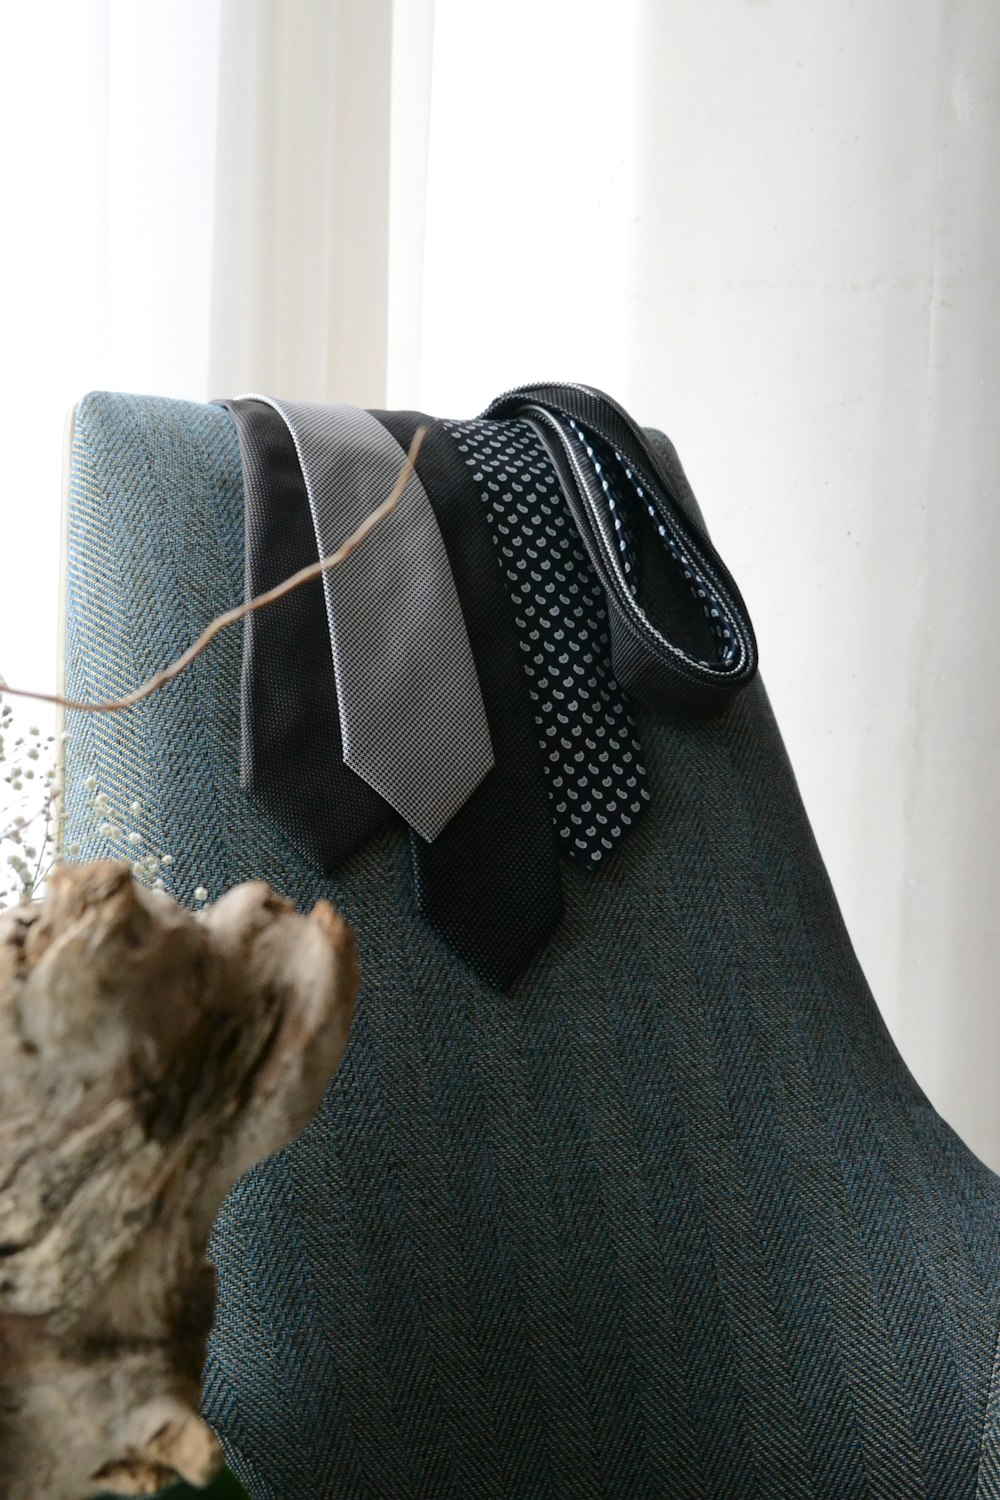 black and white polka dot bag on gray textile